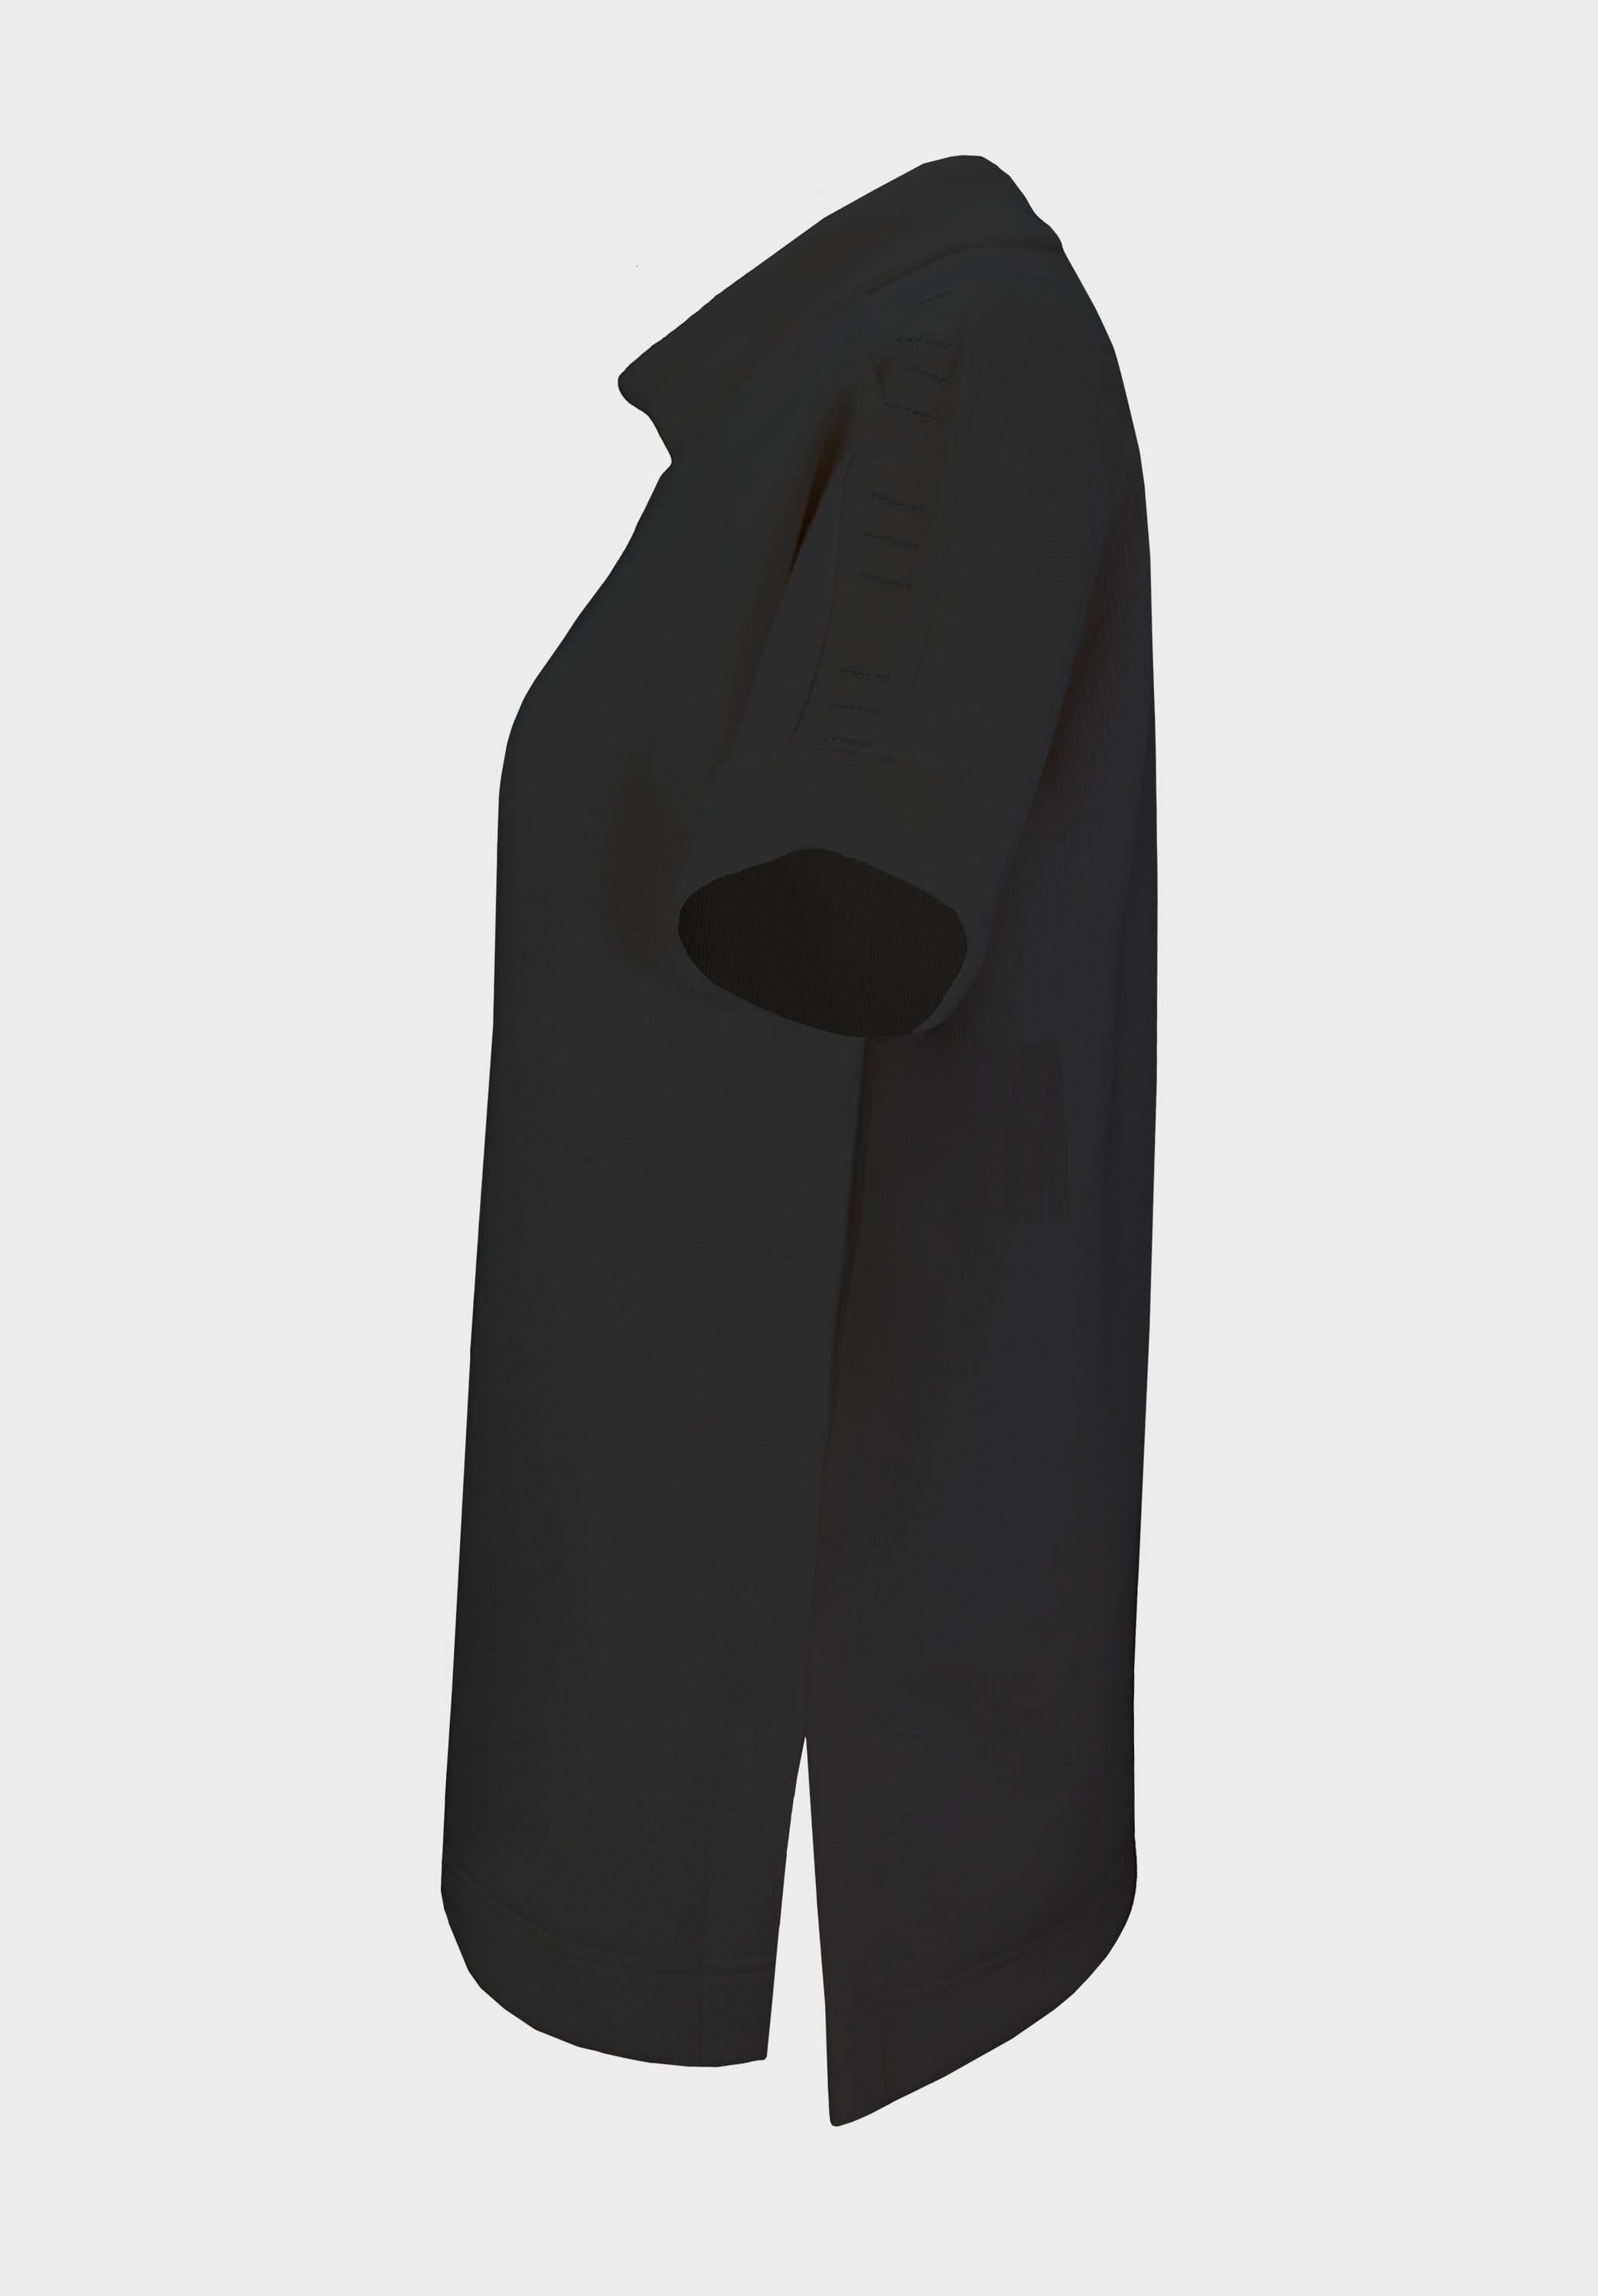 bianca Kurzarmshirt black aus softer Schulterdetails mit IDA Jersey-Qualität